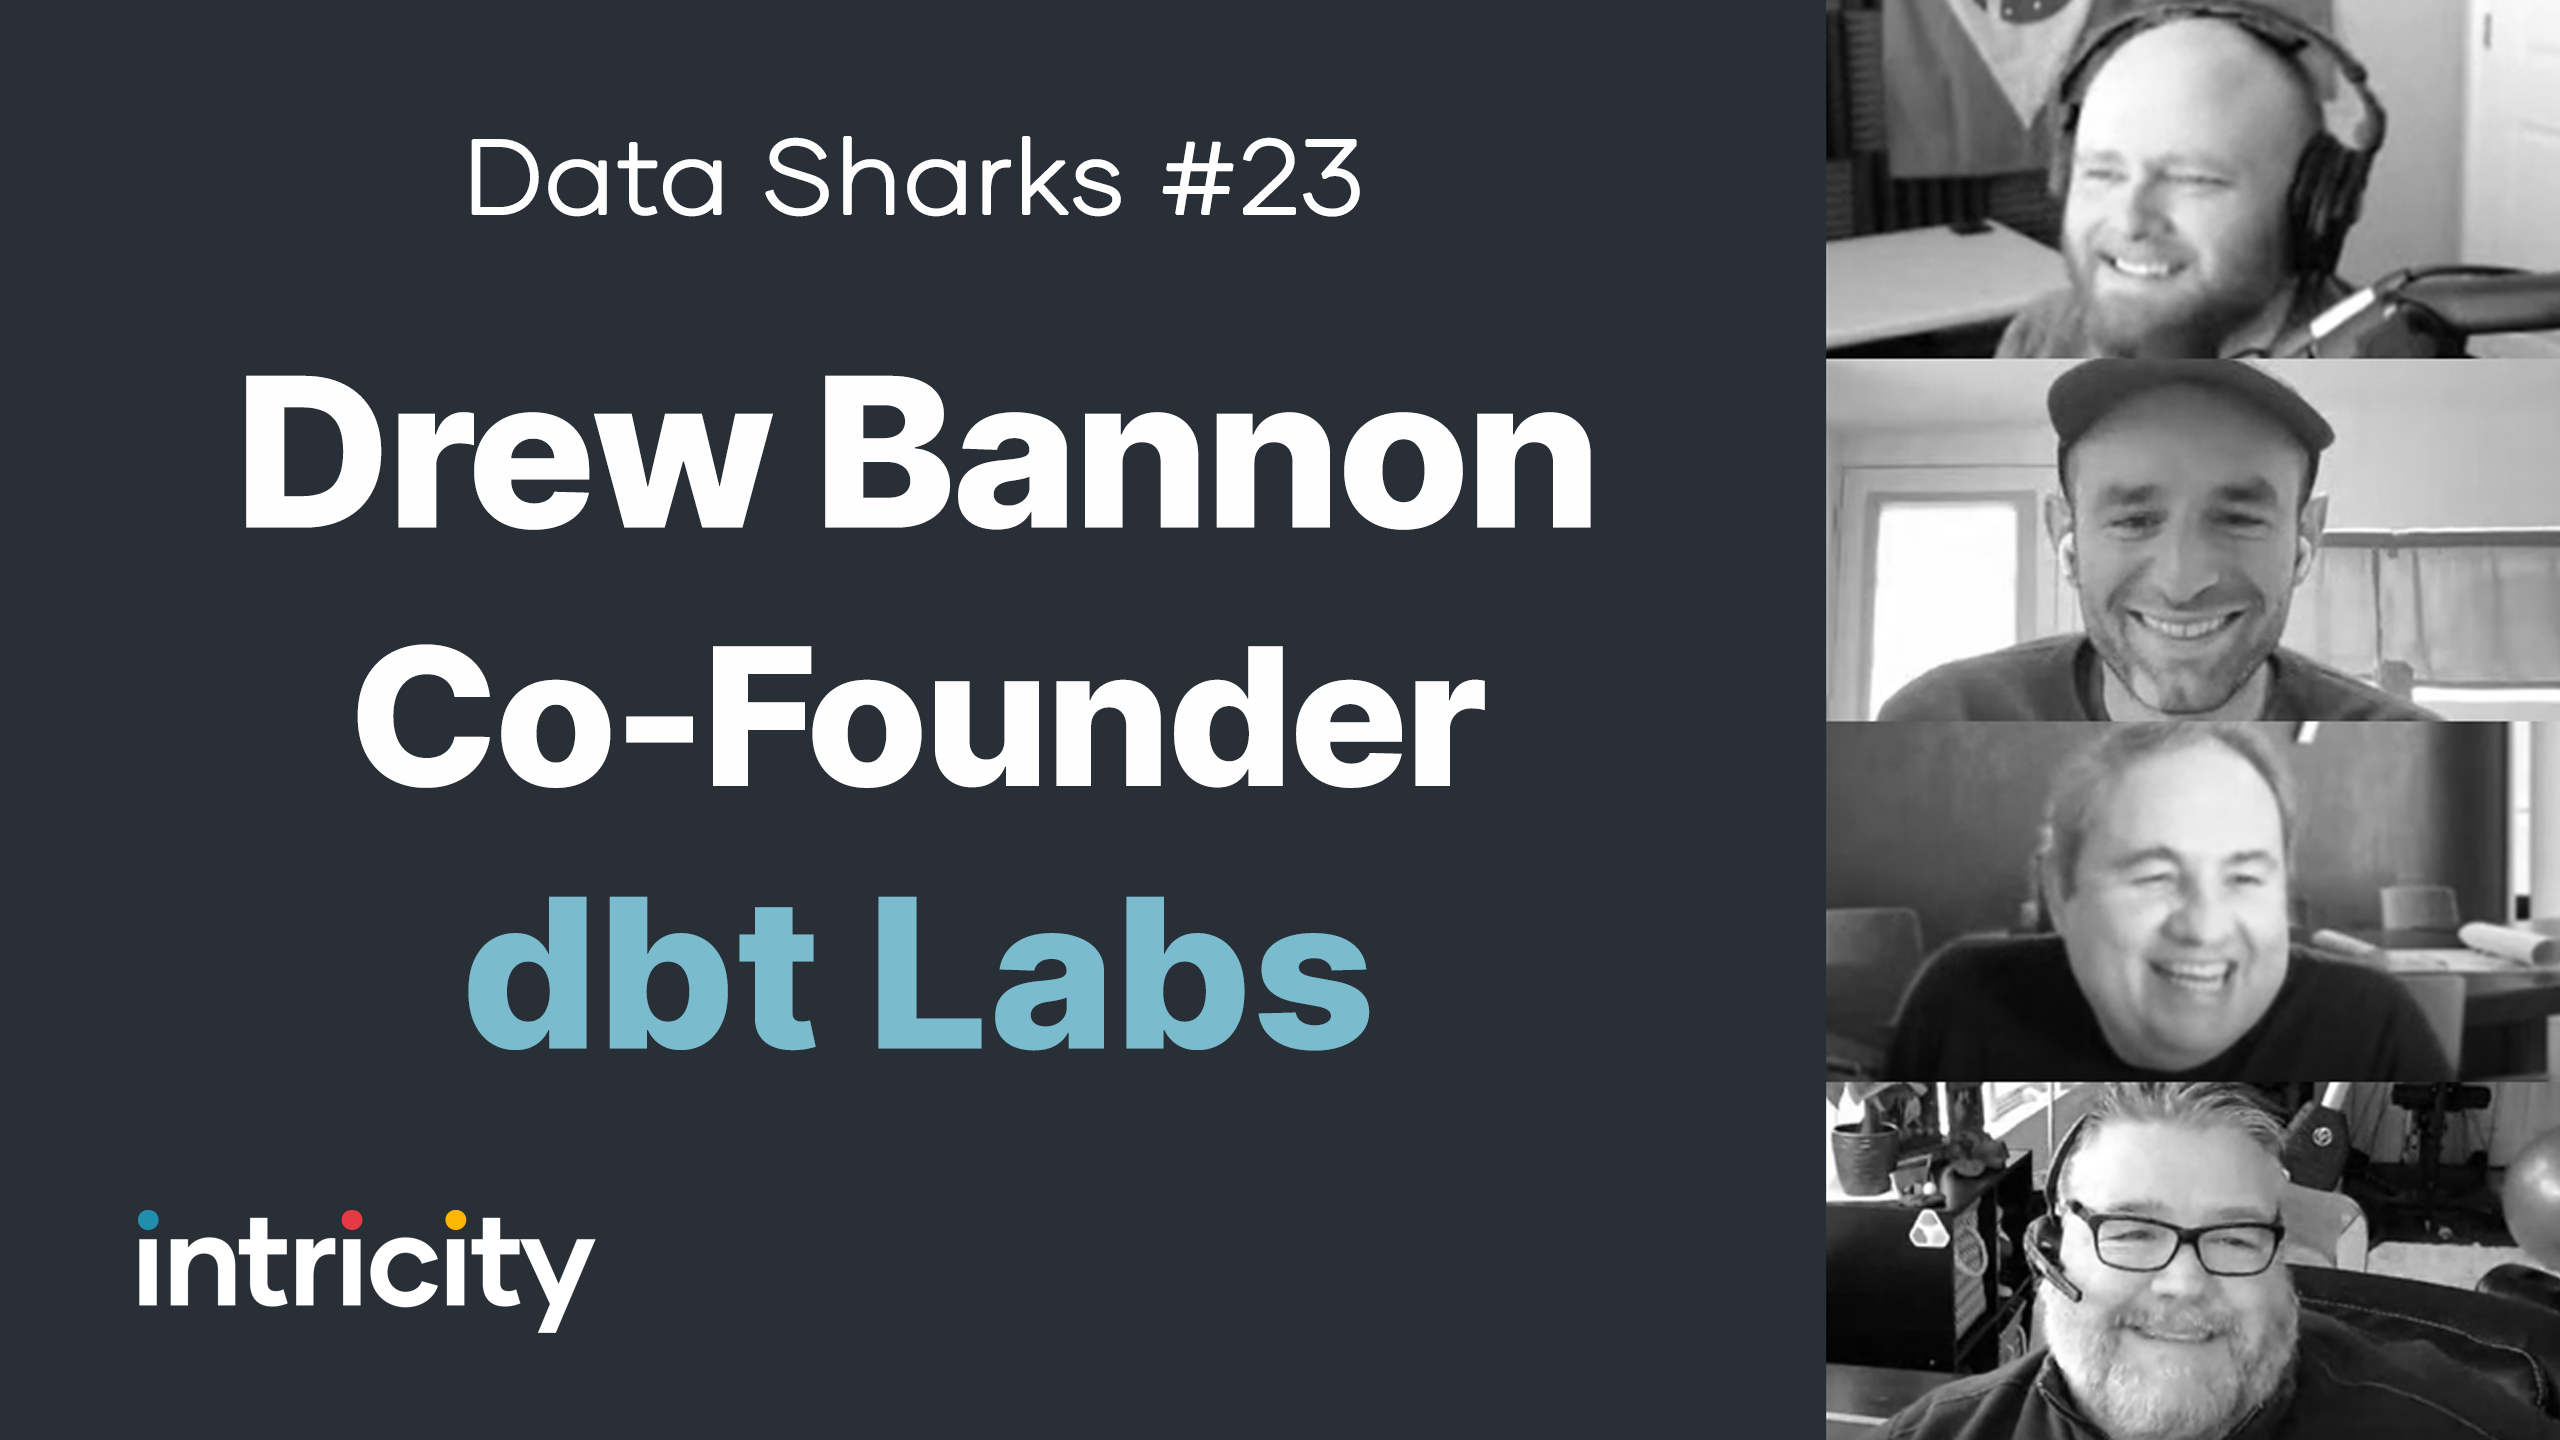 Data Sharks #23: Drew Banin, dbt Labs Co-Founder